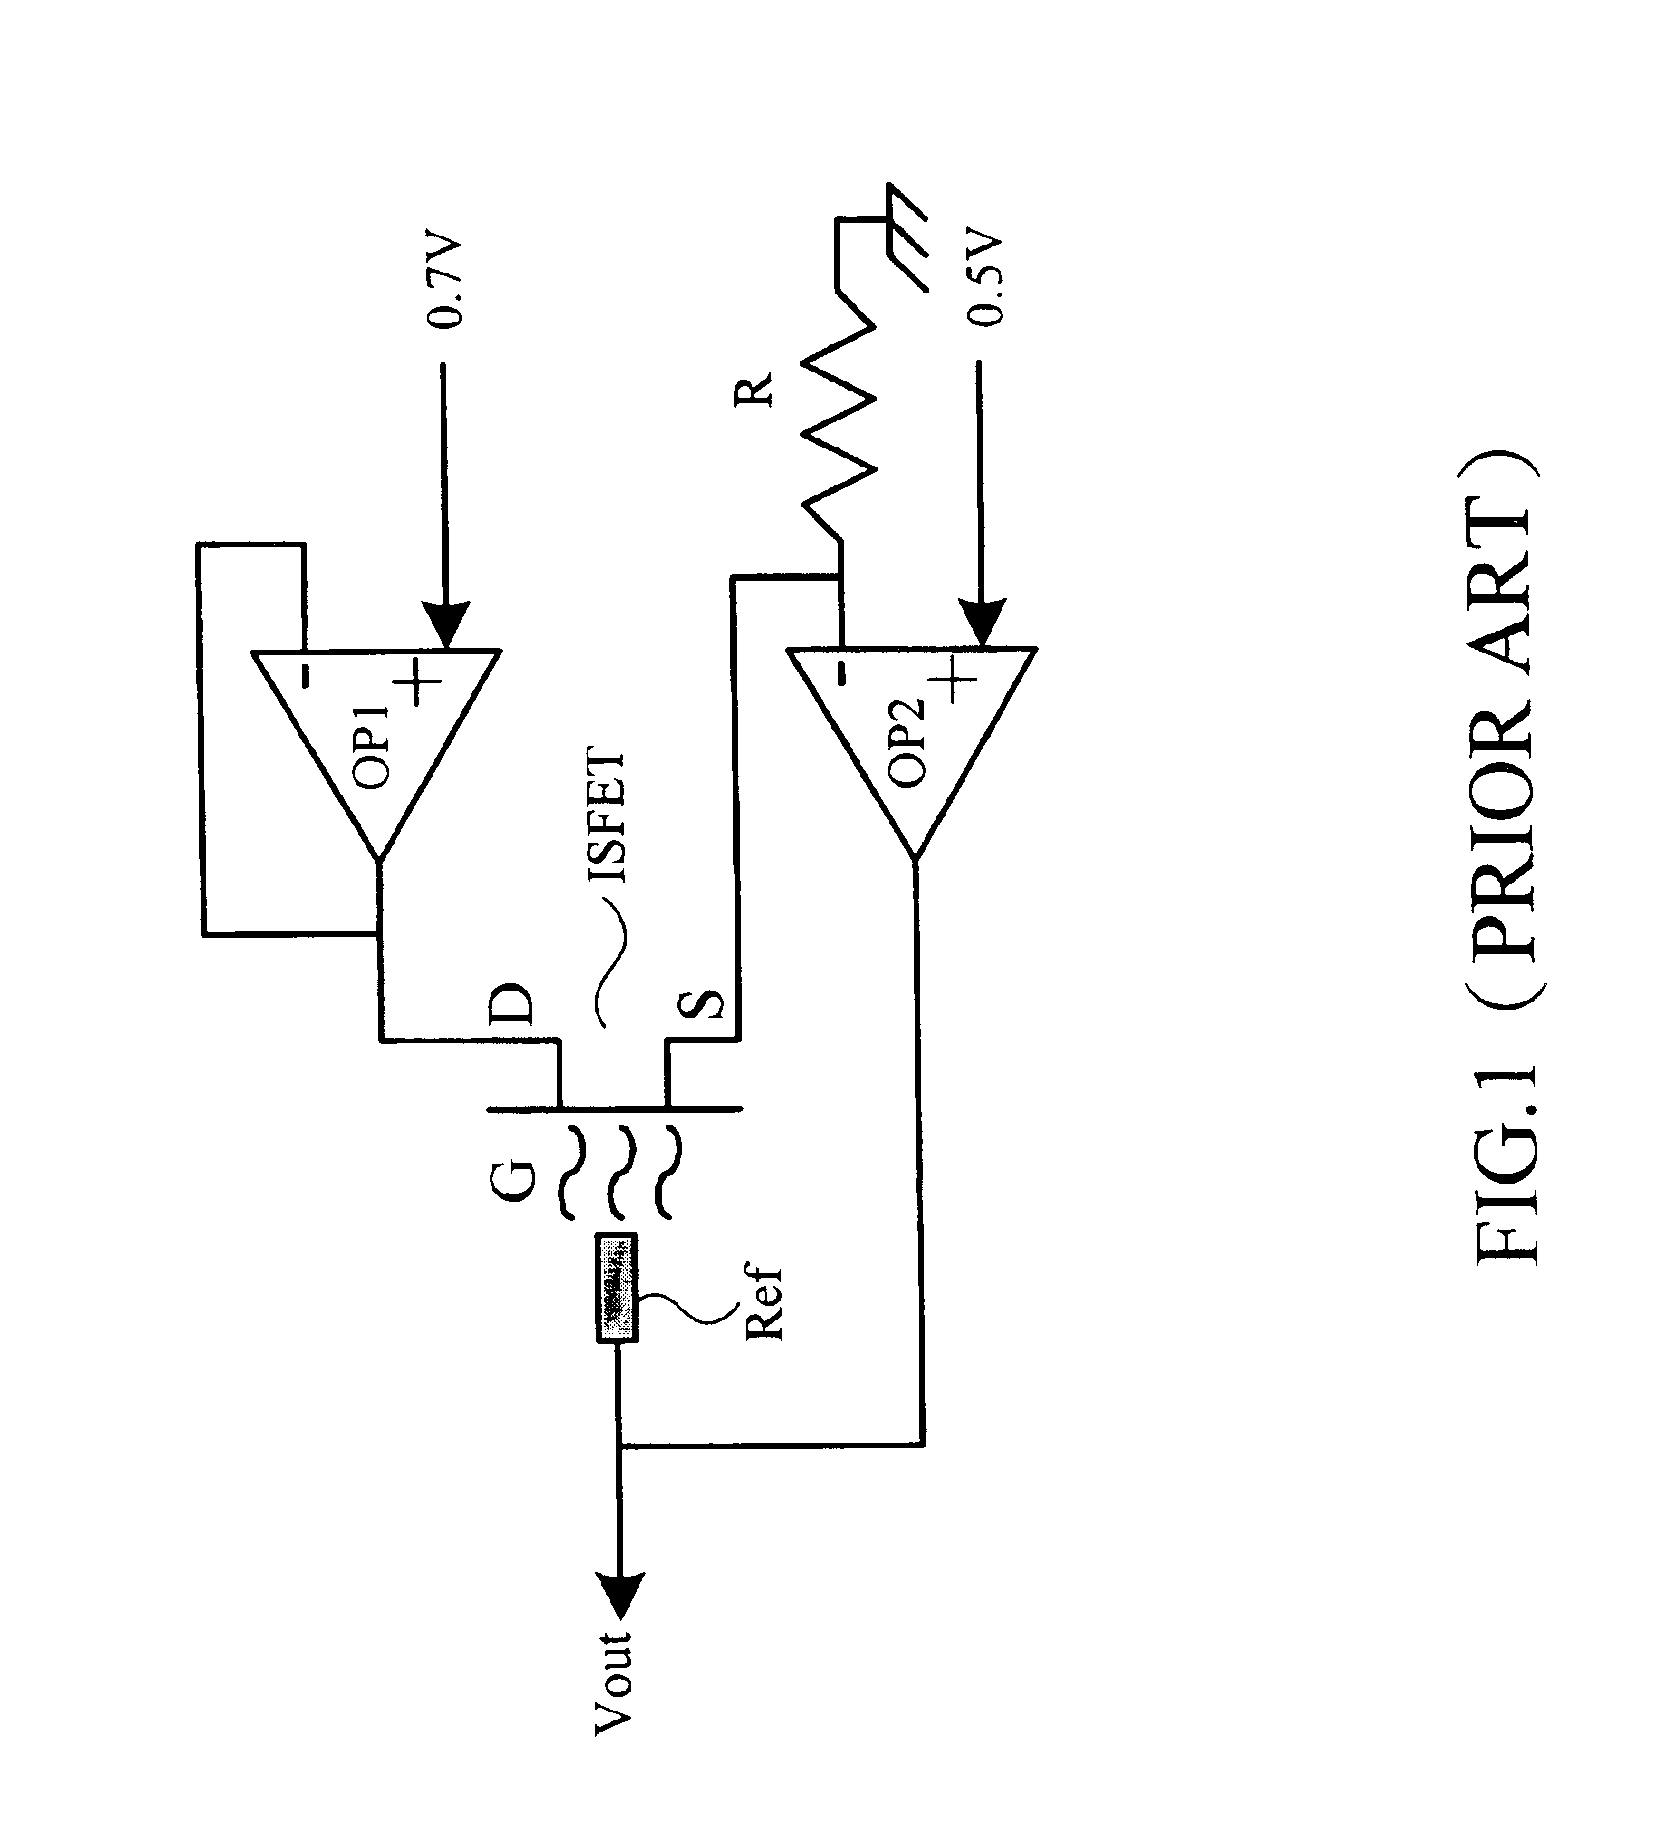 Electronic circuit for ion sensor